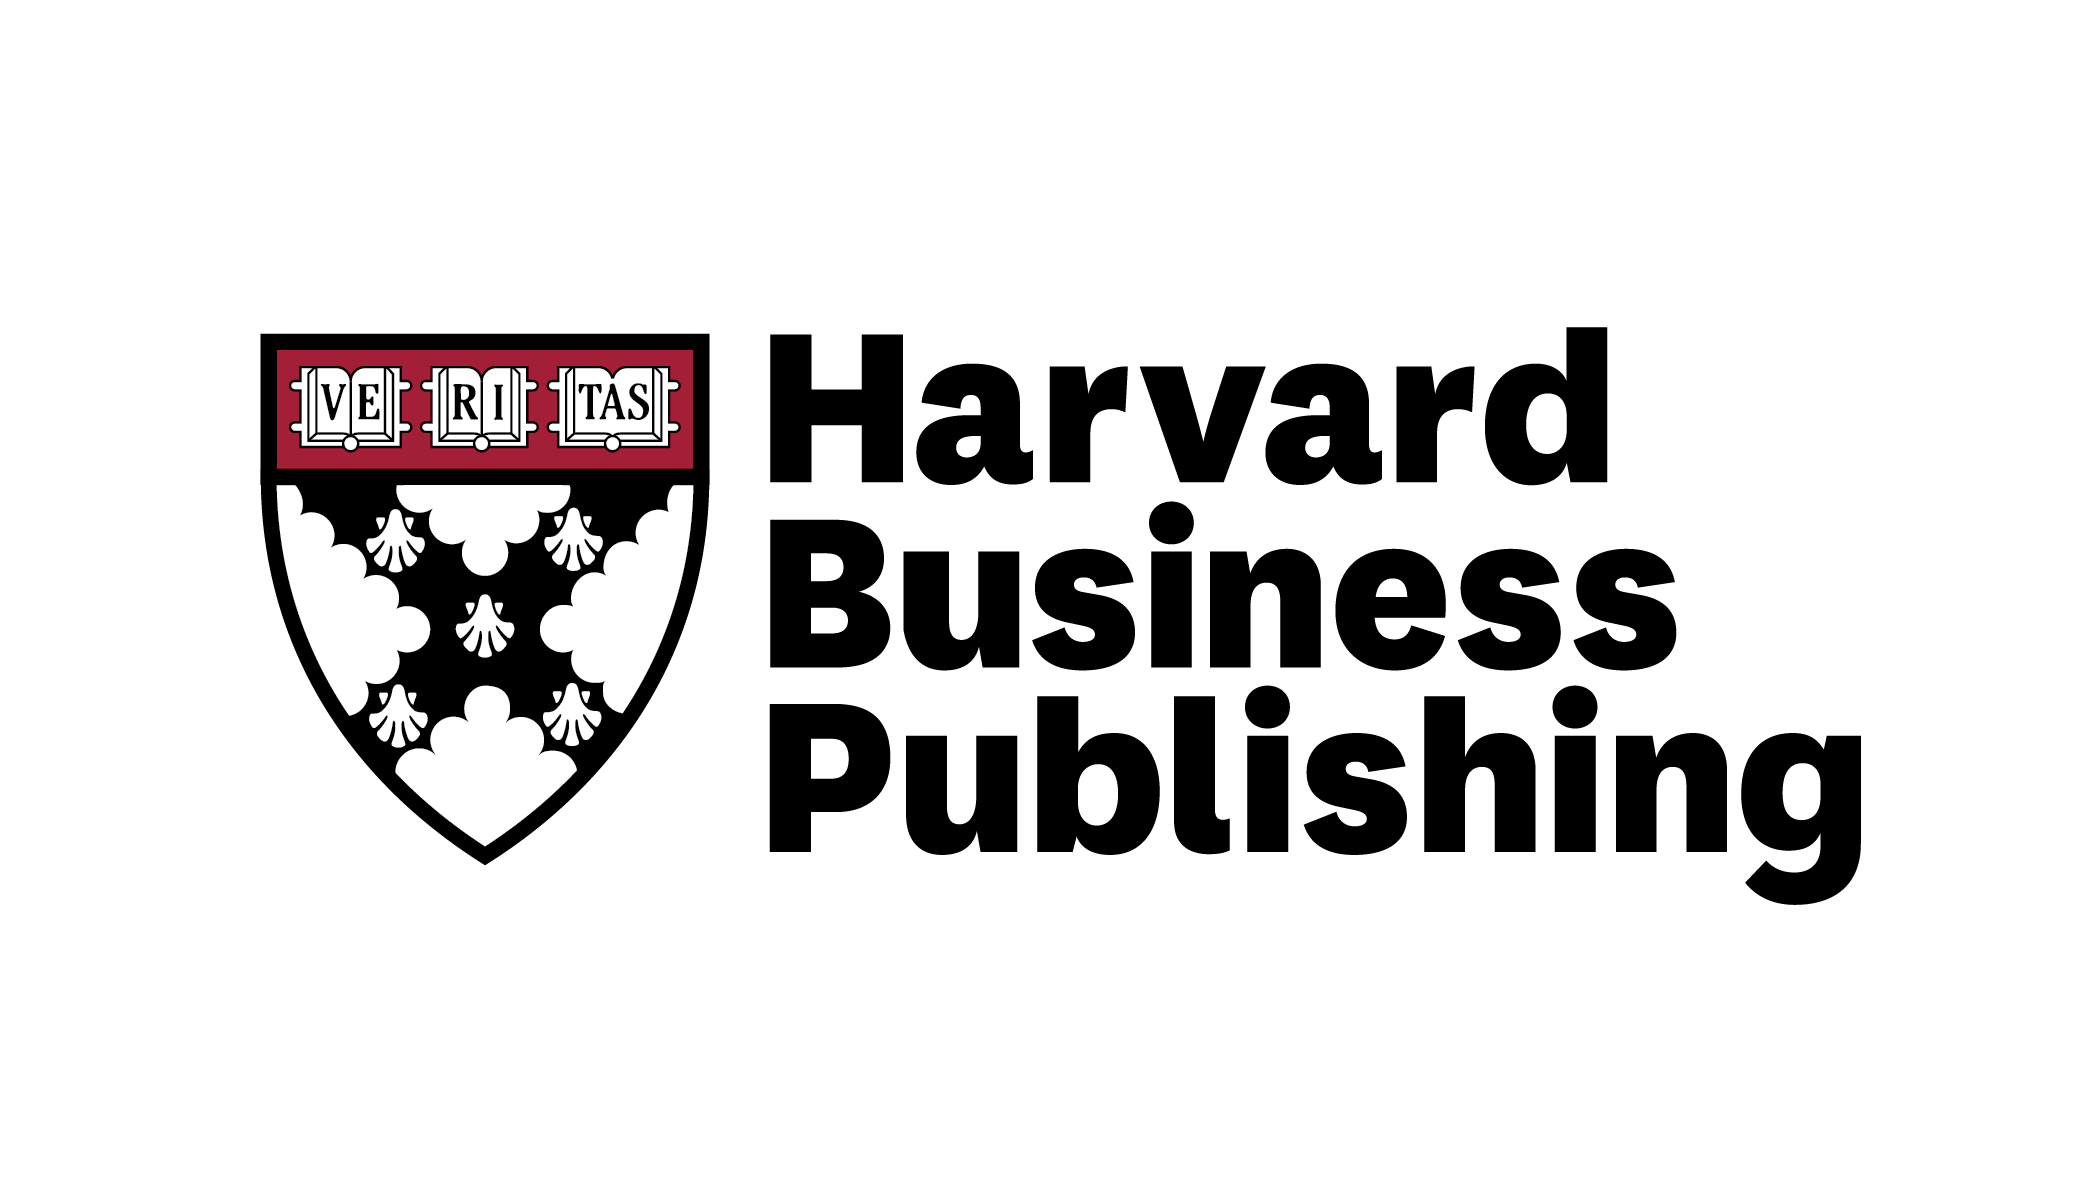 Harvard Business Publishing logo.